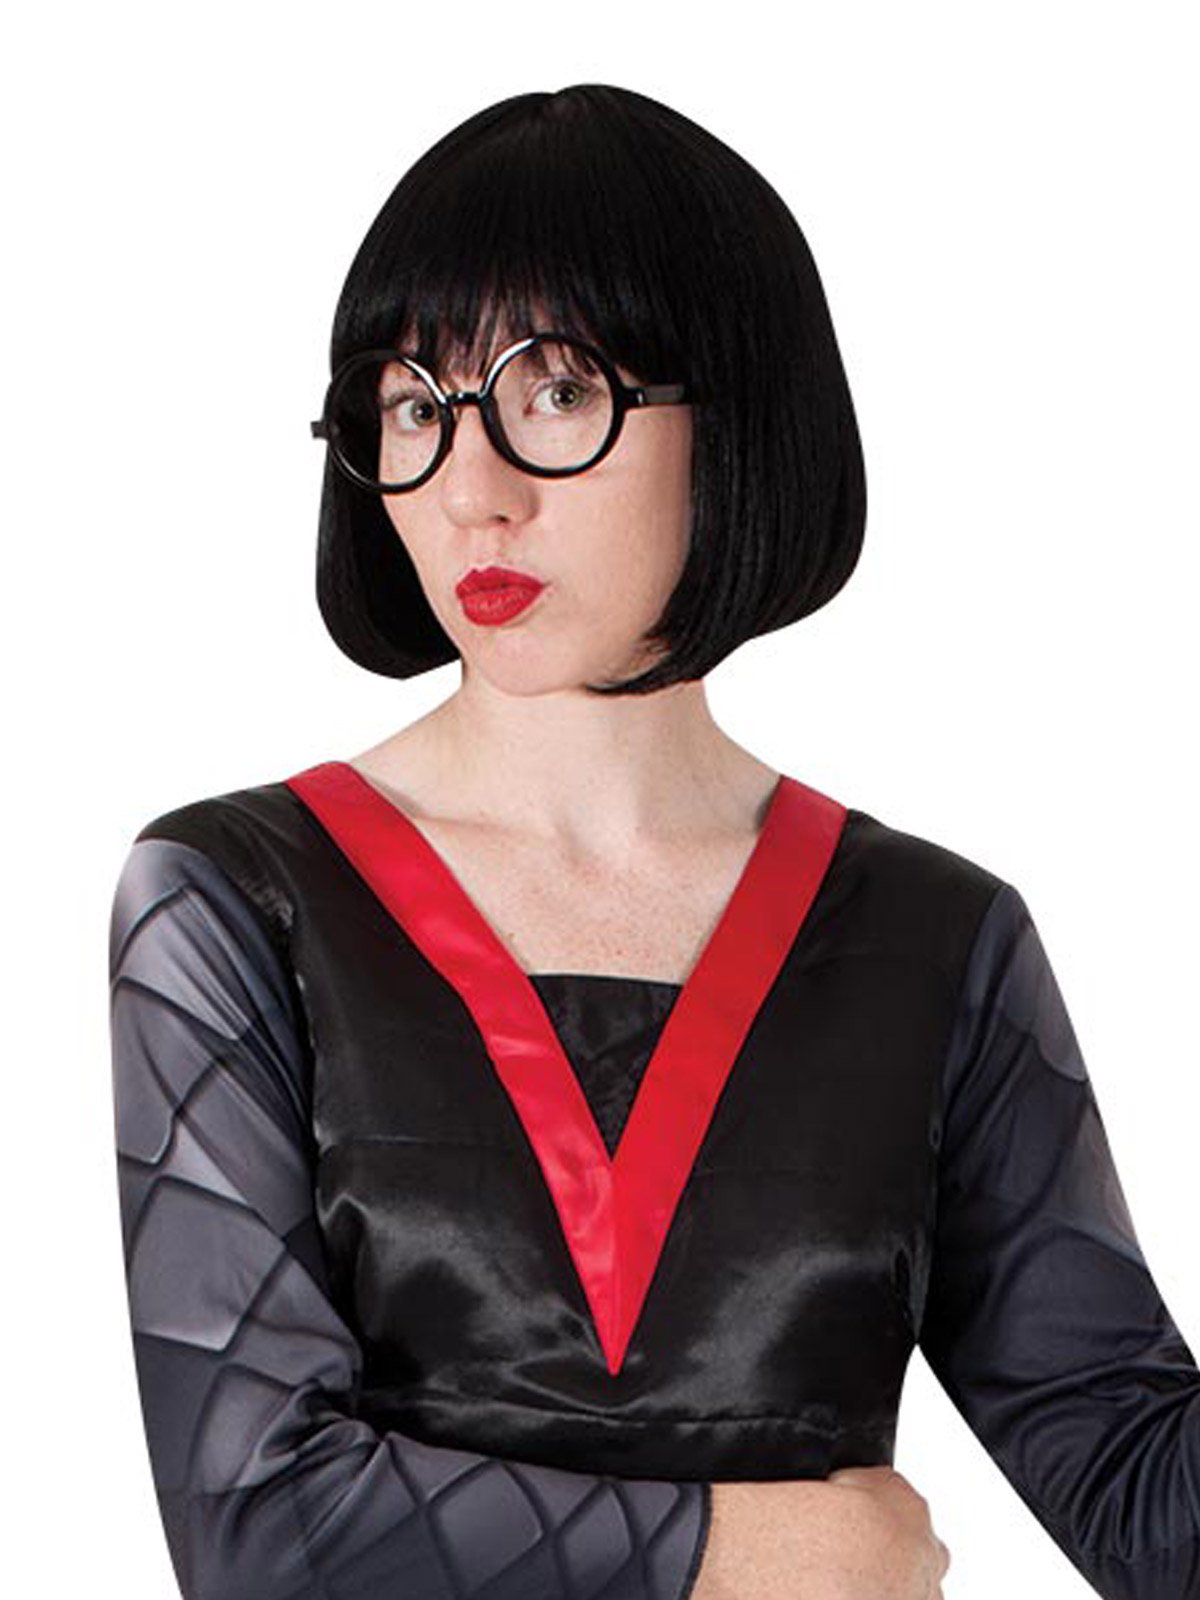 Edna Mode Gets a Fashion Spread Worthy of a Superhero Designer